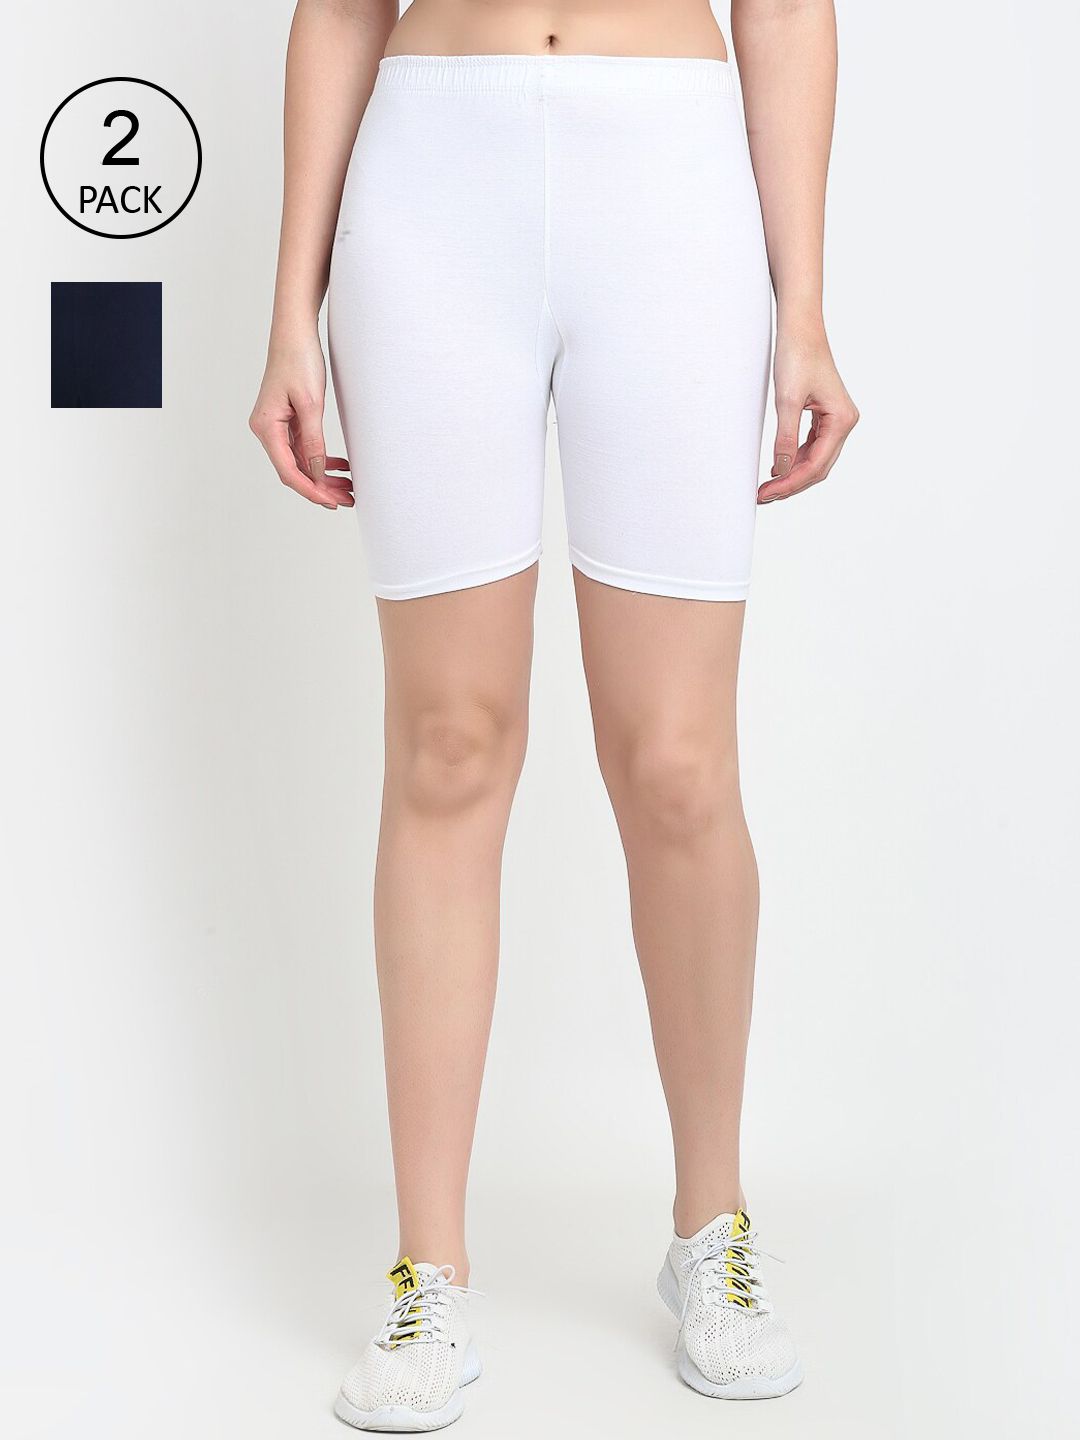 GRACIT Women Pack of 2 White & Navy Blue Biker Shorts Price in India